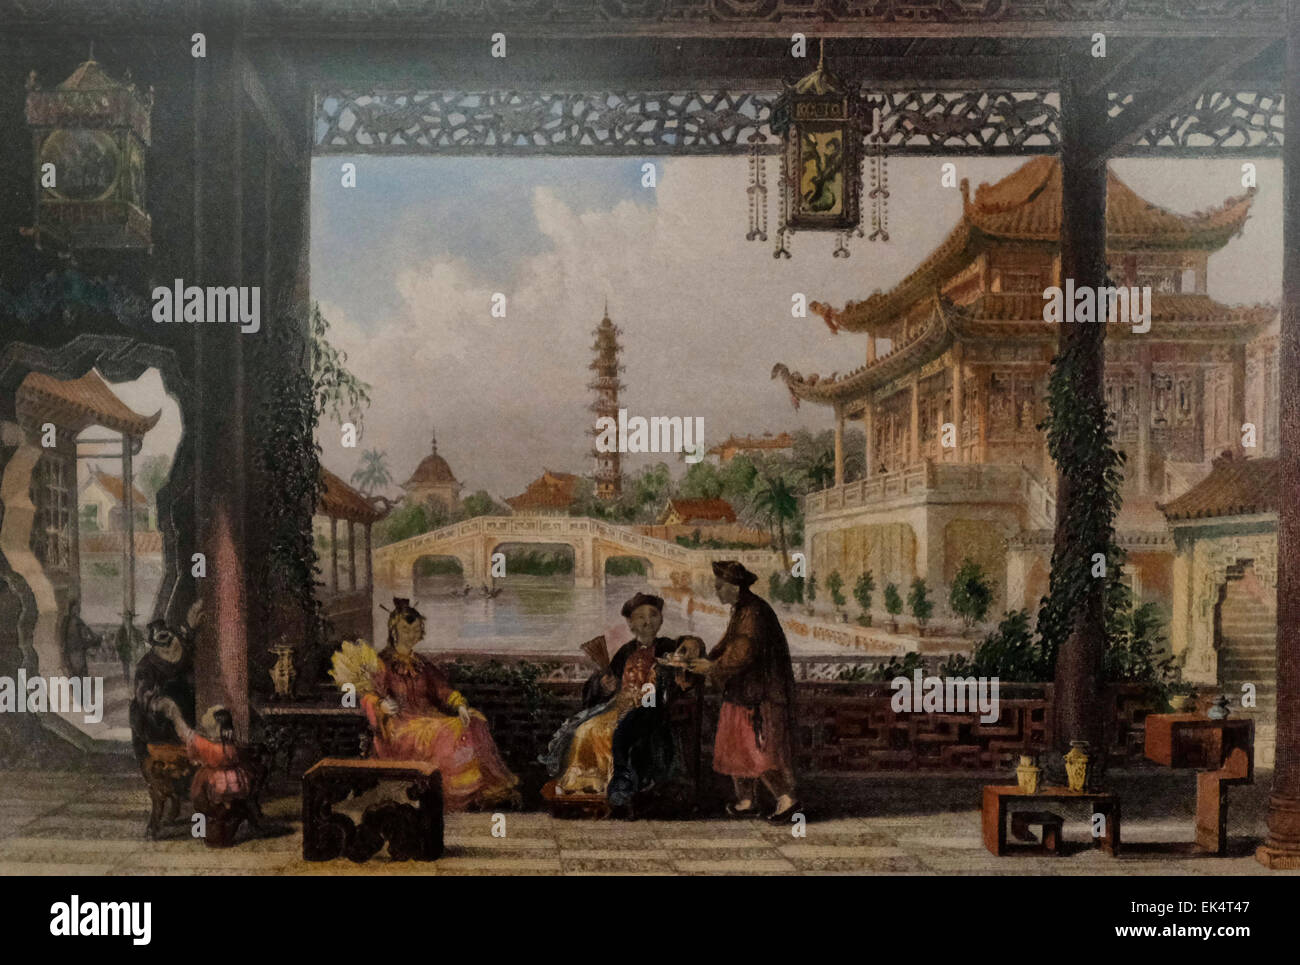 Pavilion and Garden of a Mandarin near Peking - 19th Century China Stock Photo